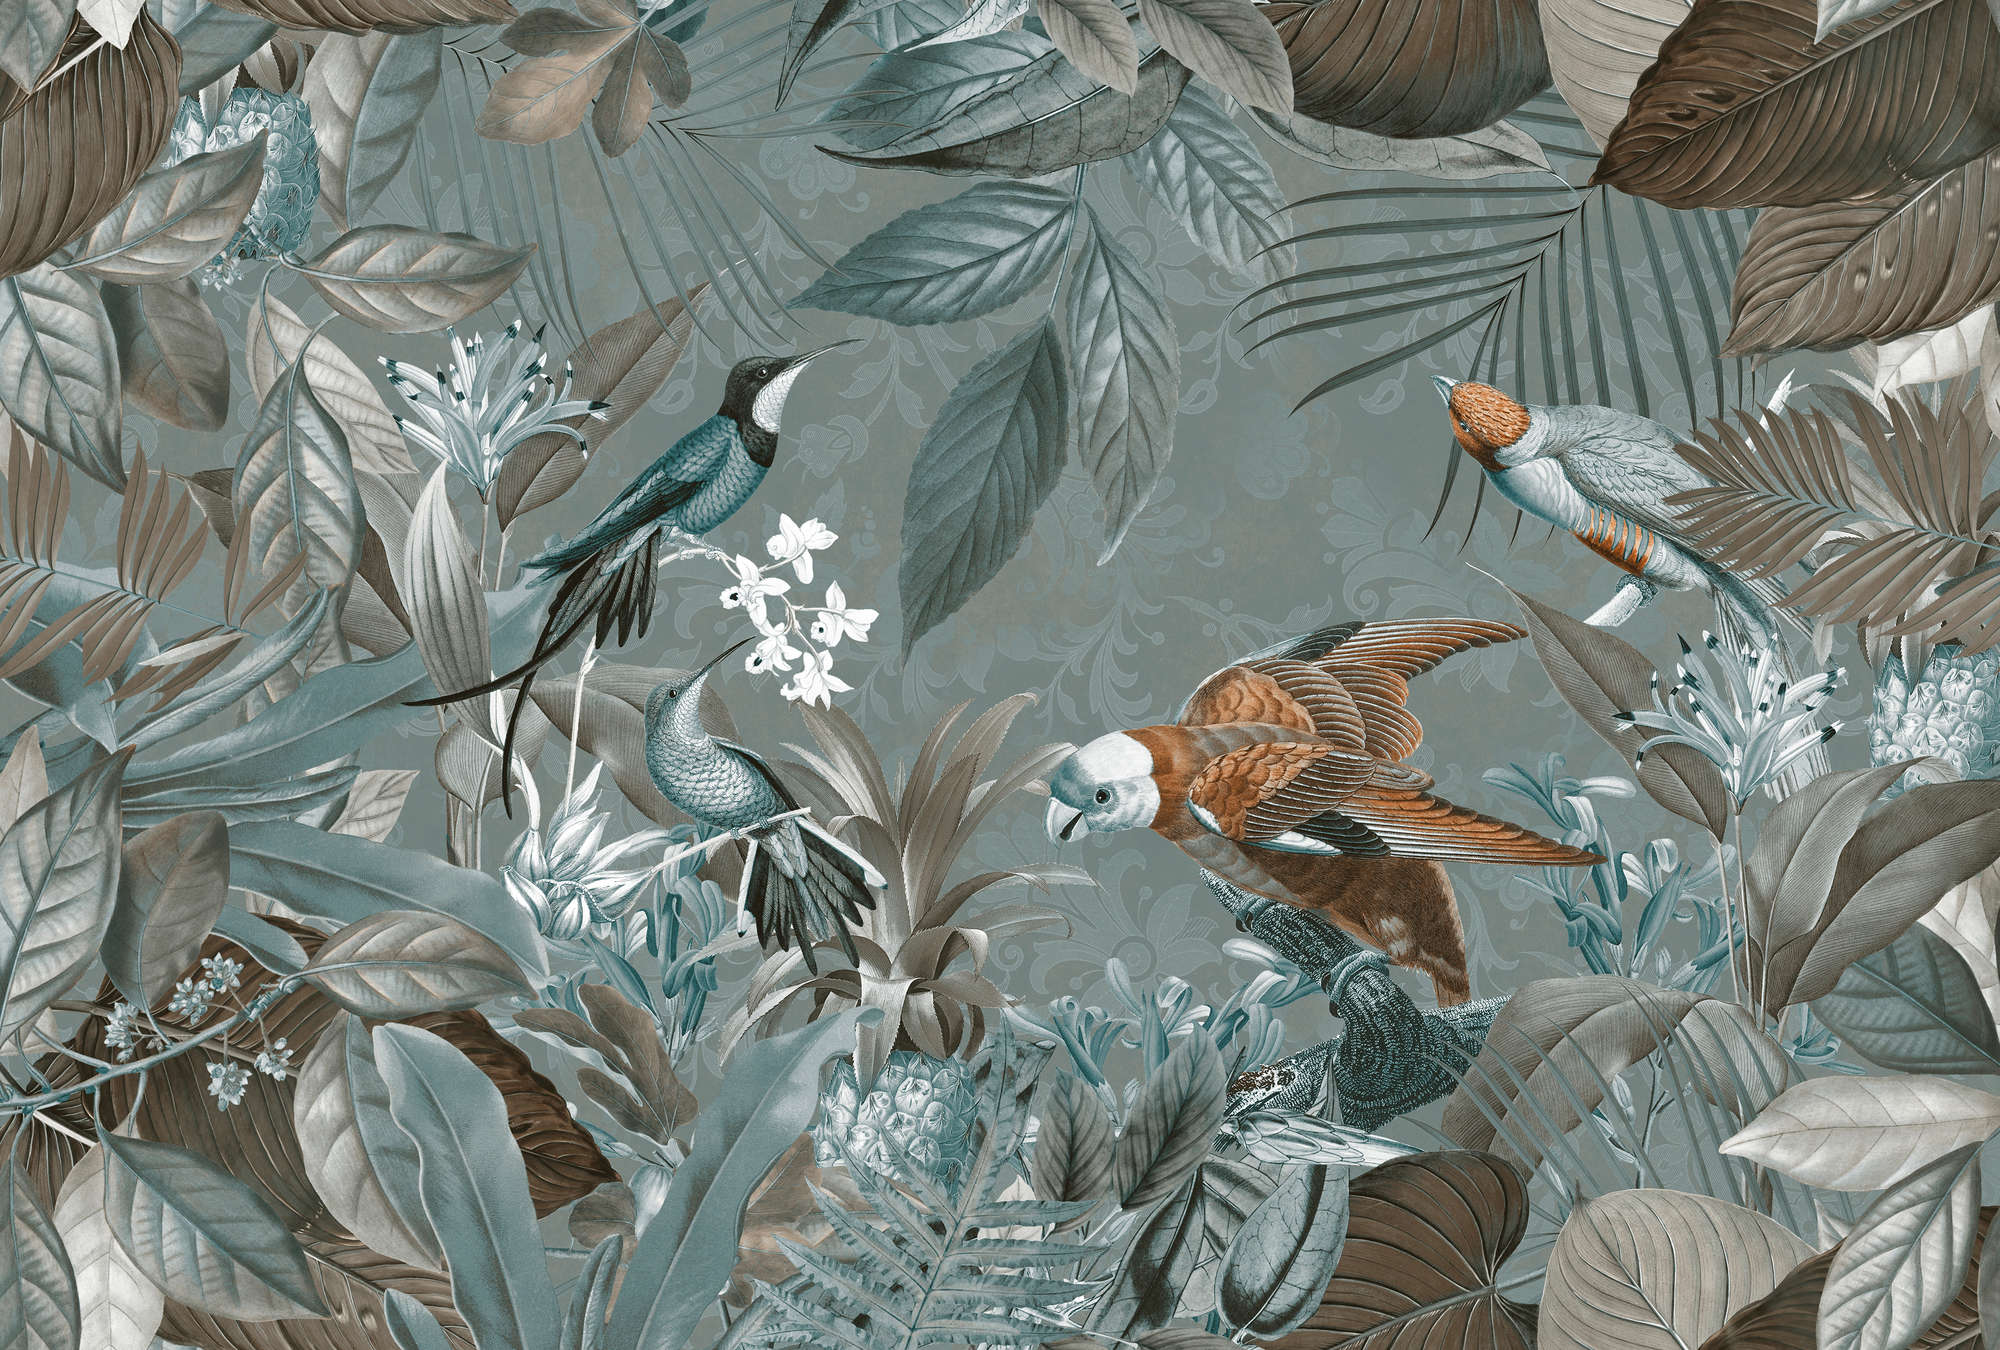             Jungle mural birds & tropical design
        